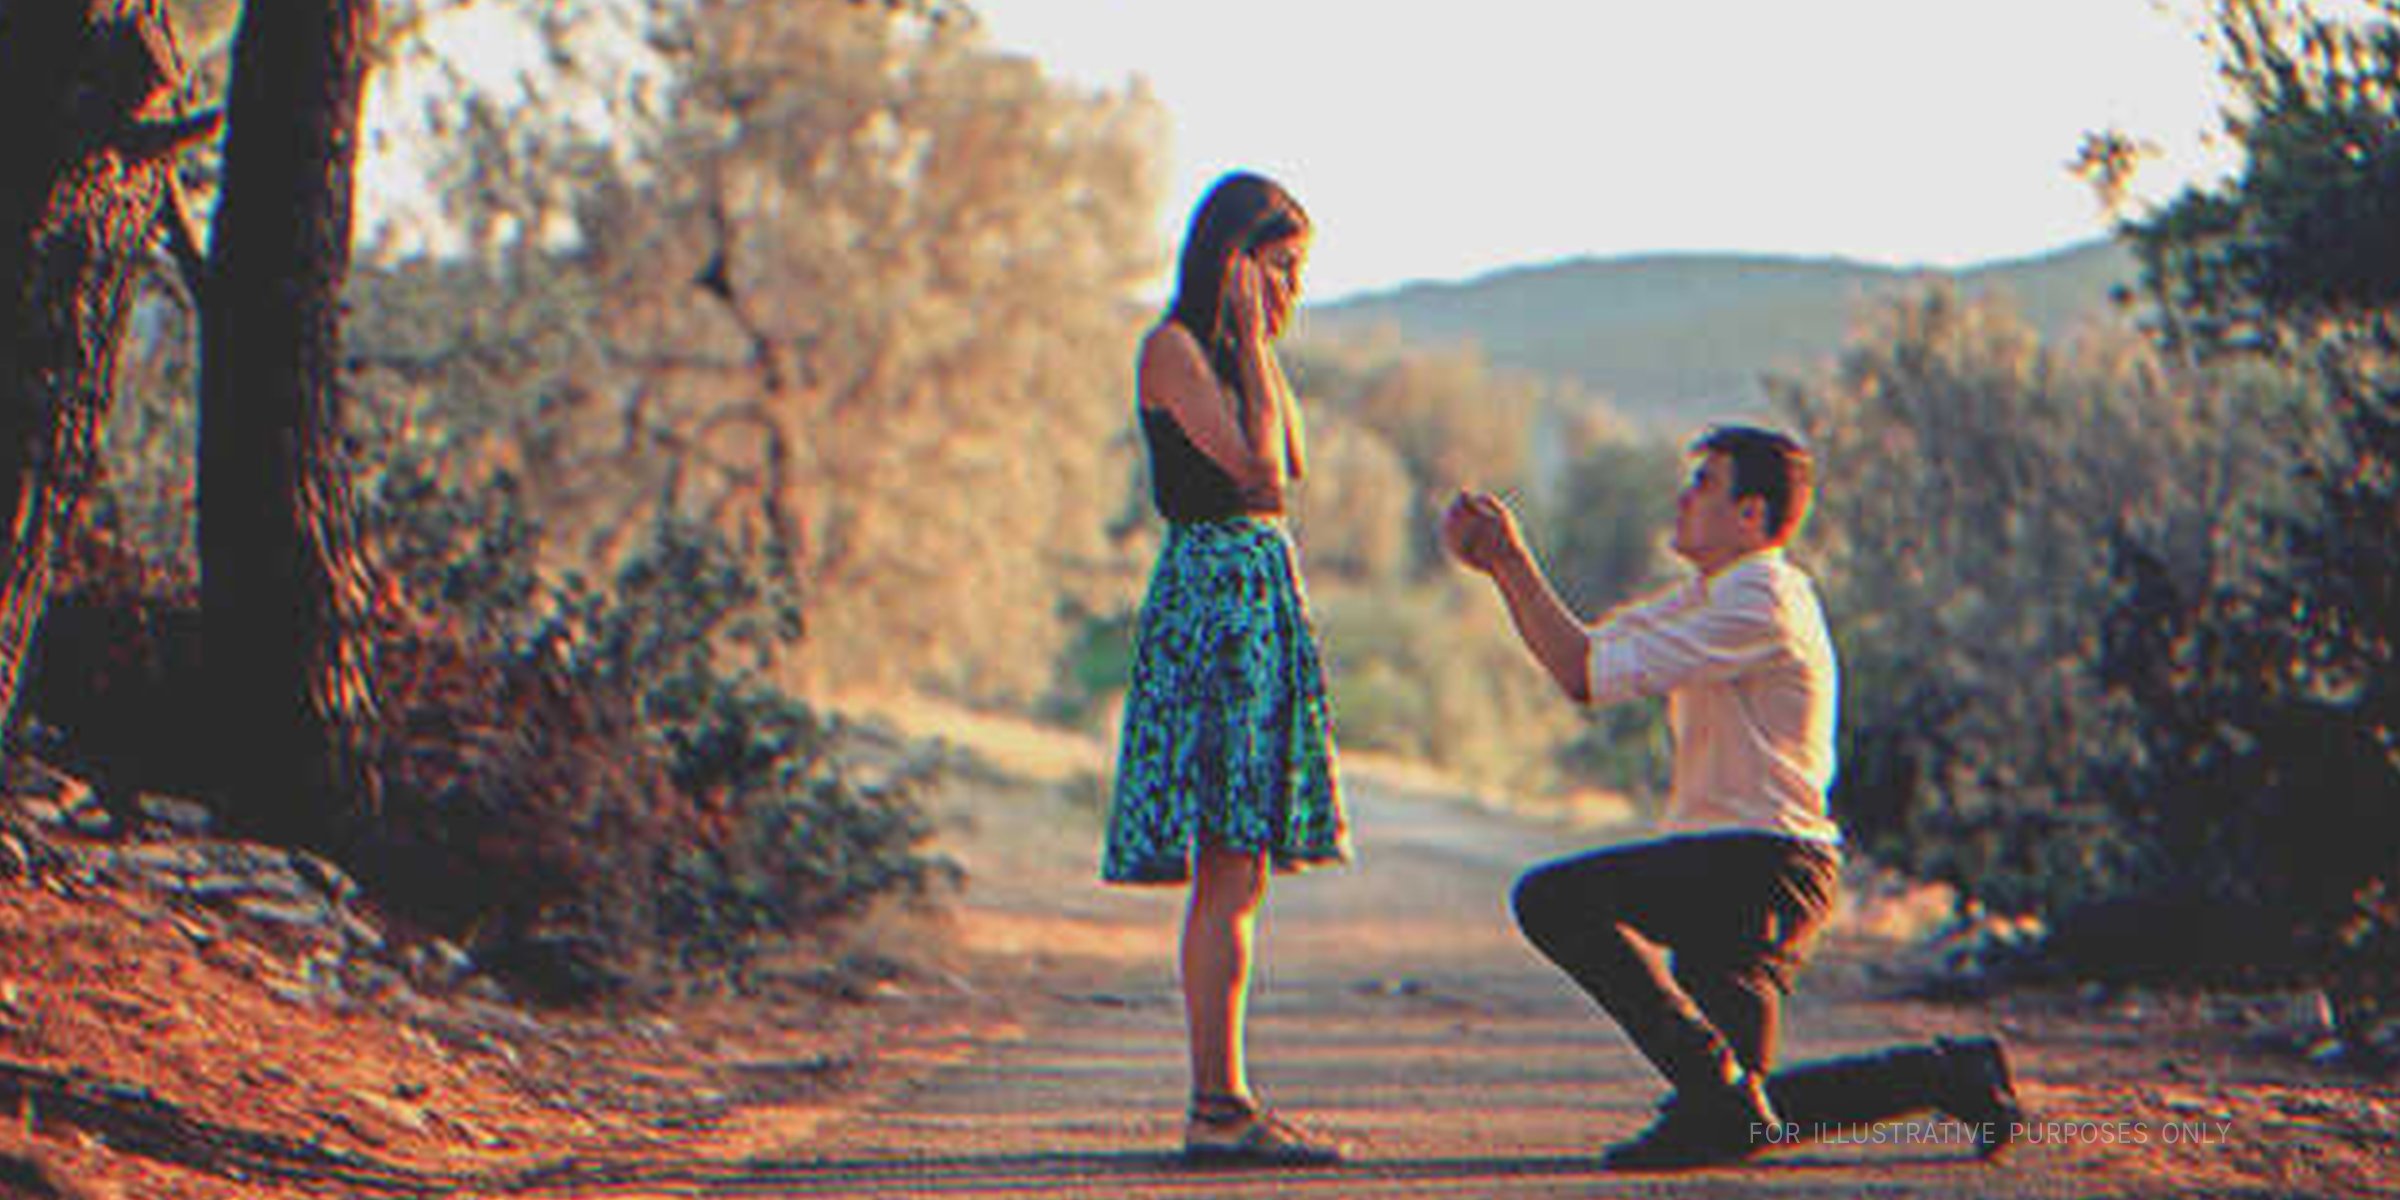 Young man proposing to young woman | Source: Shutterstock